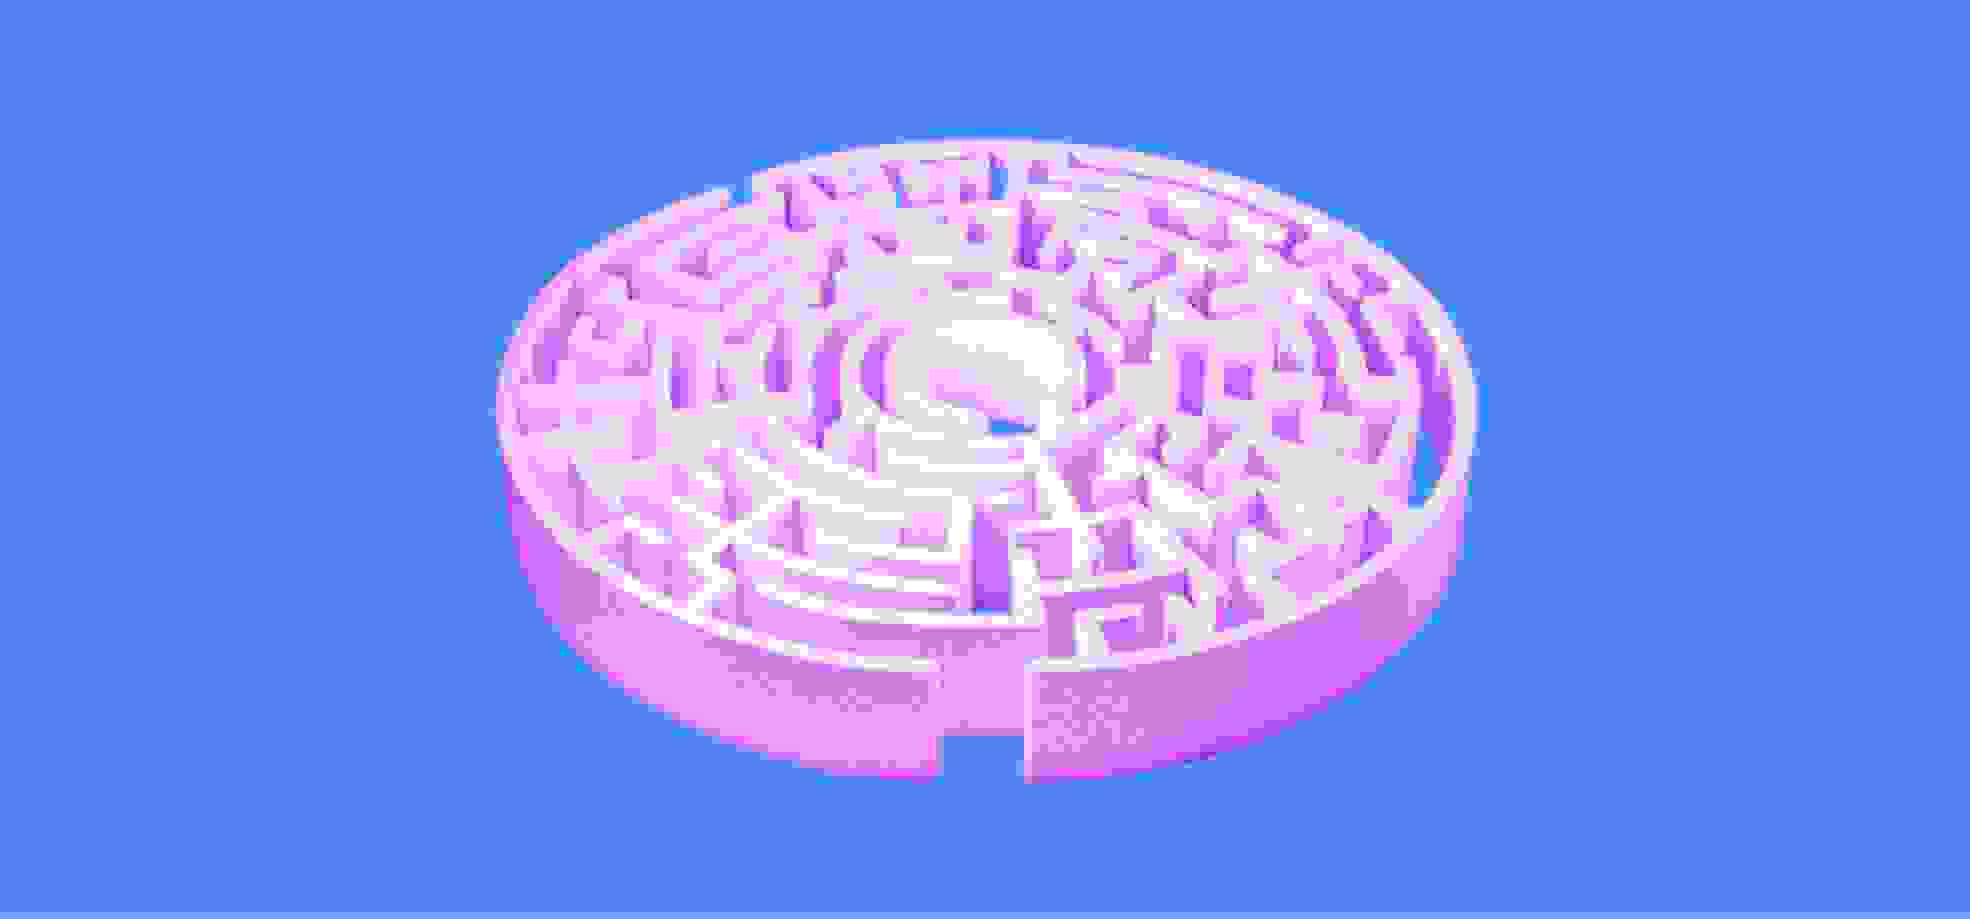 A pink labyrinth on blue background